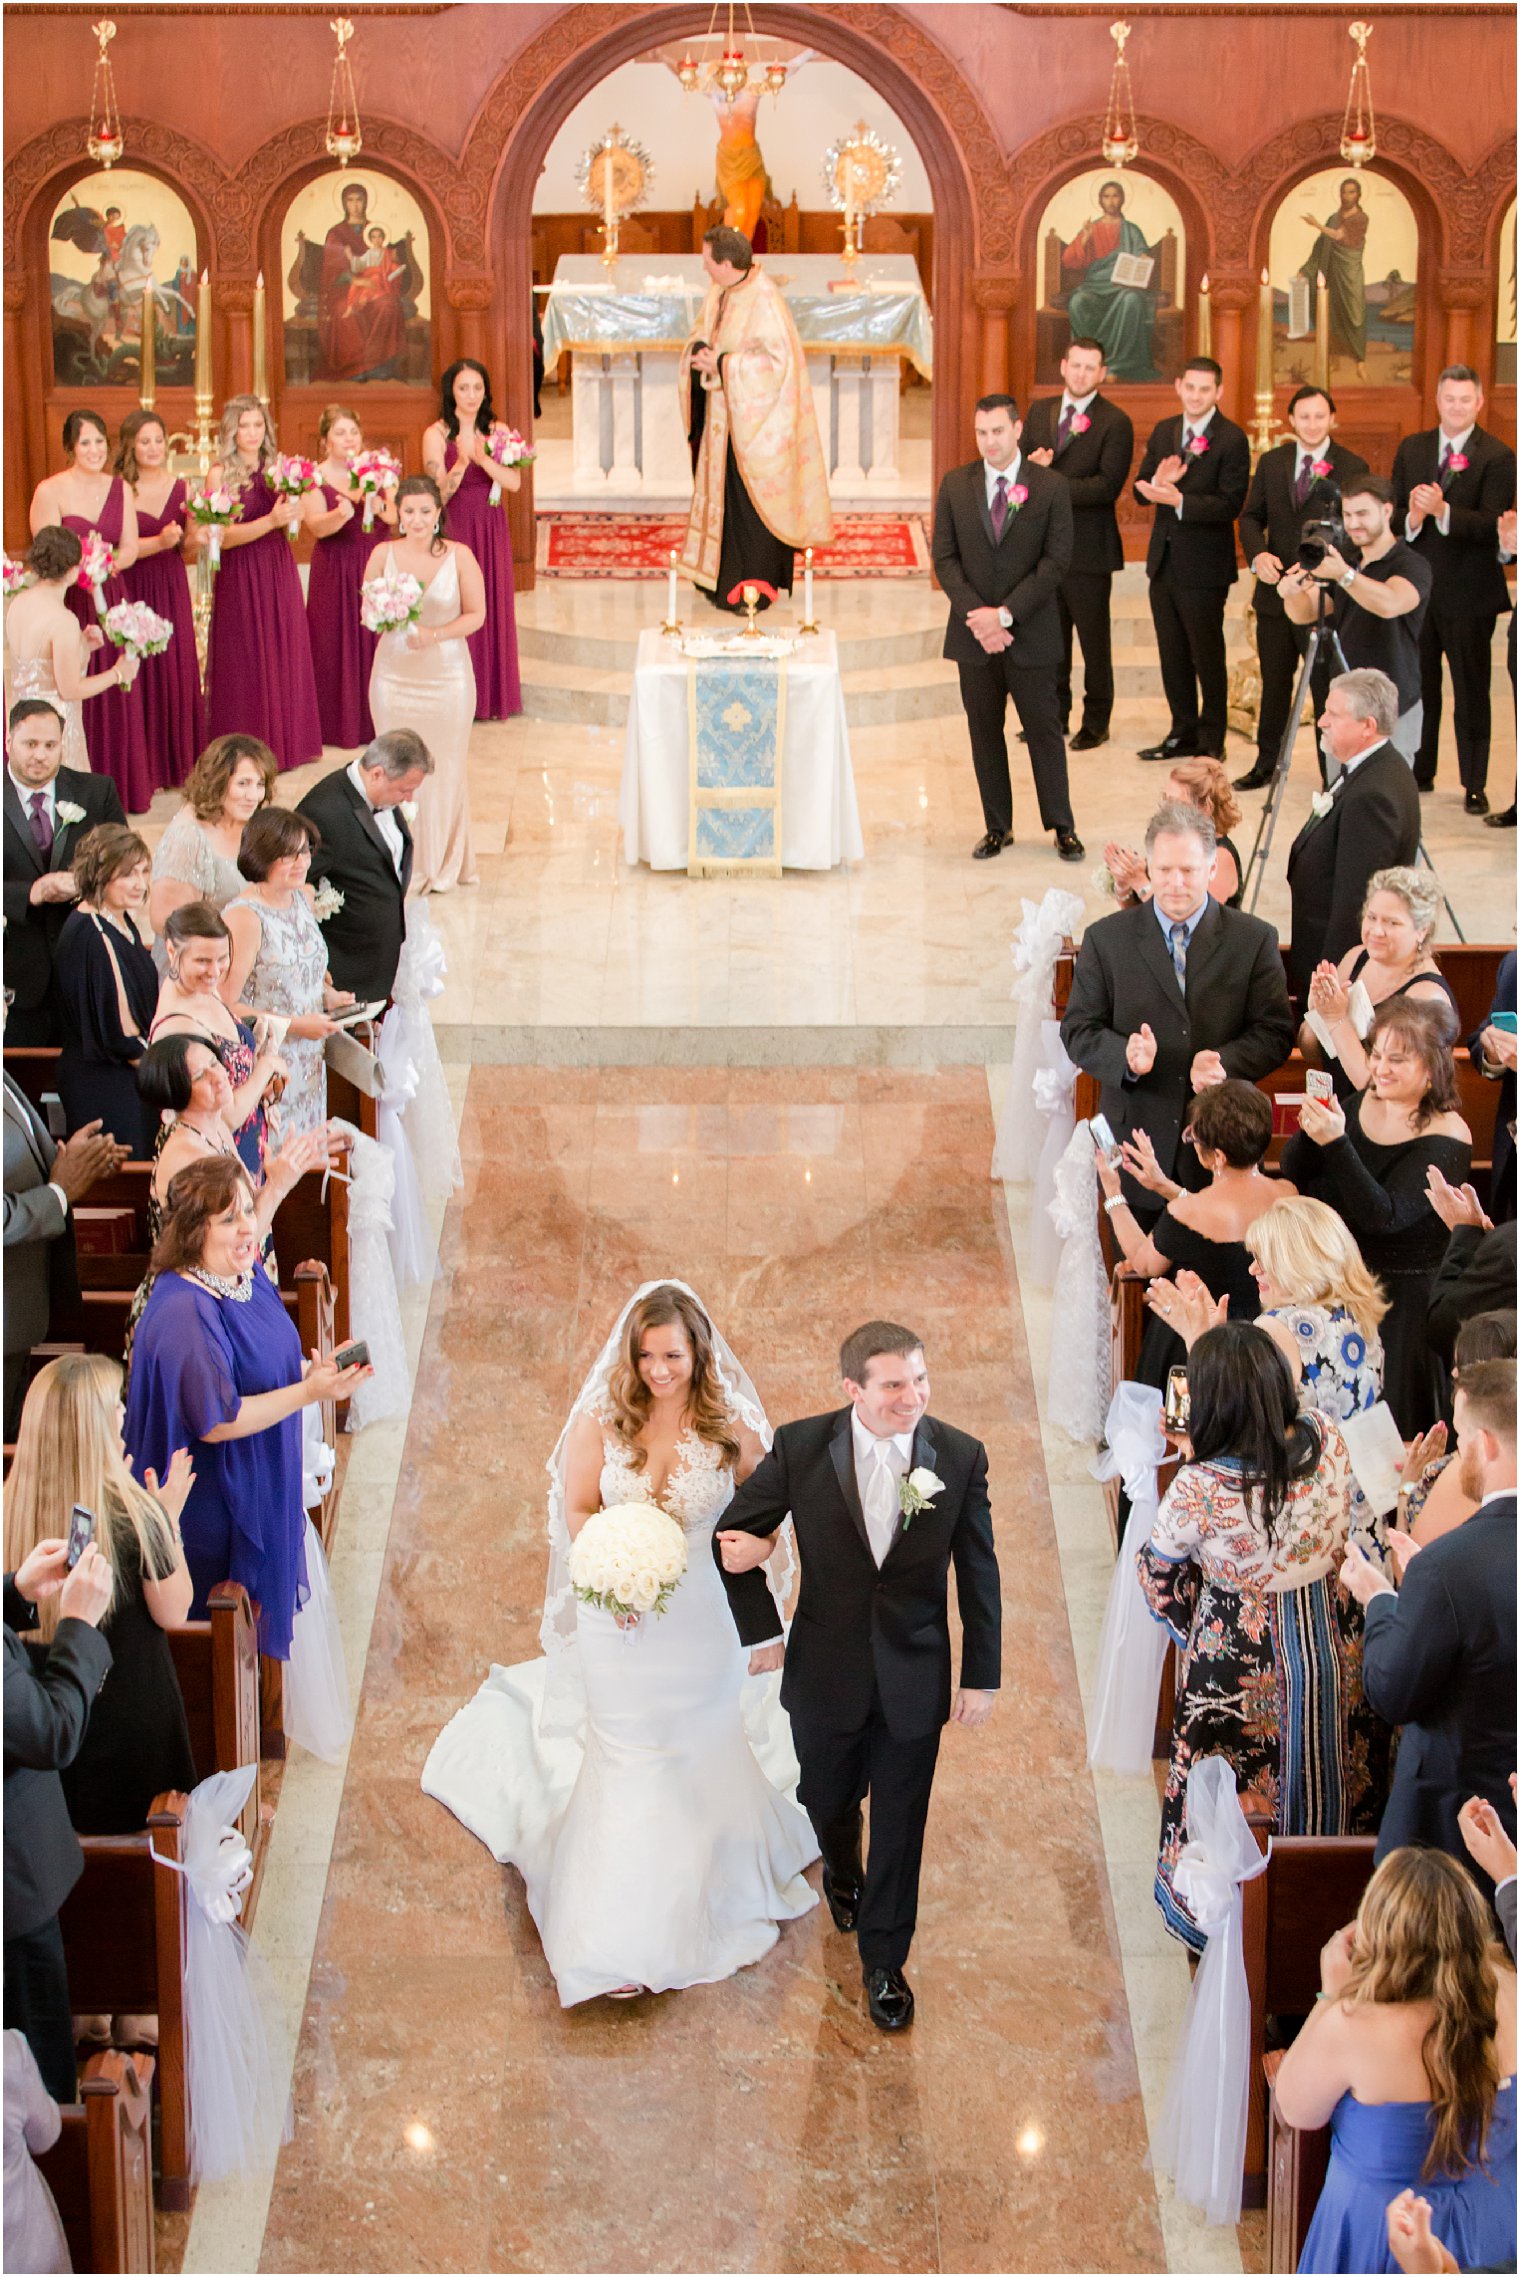 Wedding recessional at St. George Greek Orthodox Church in Ocean Township, NJ